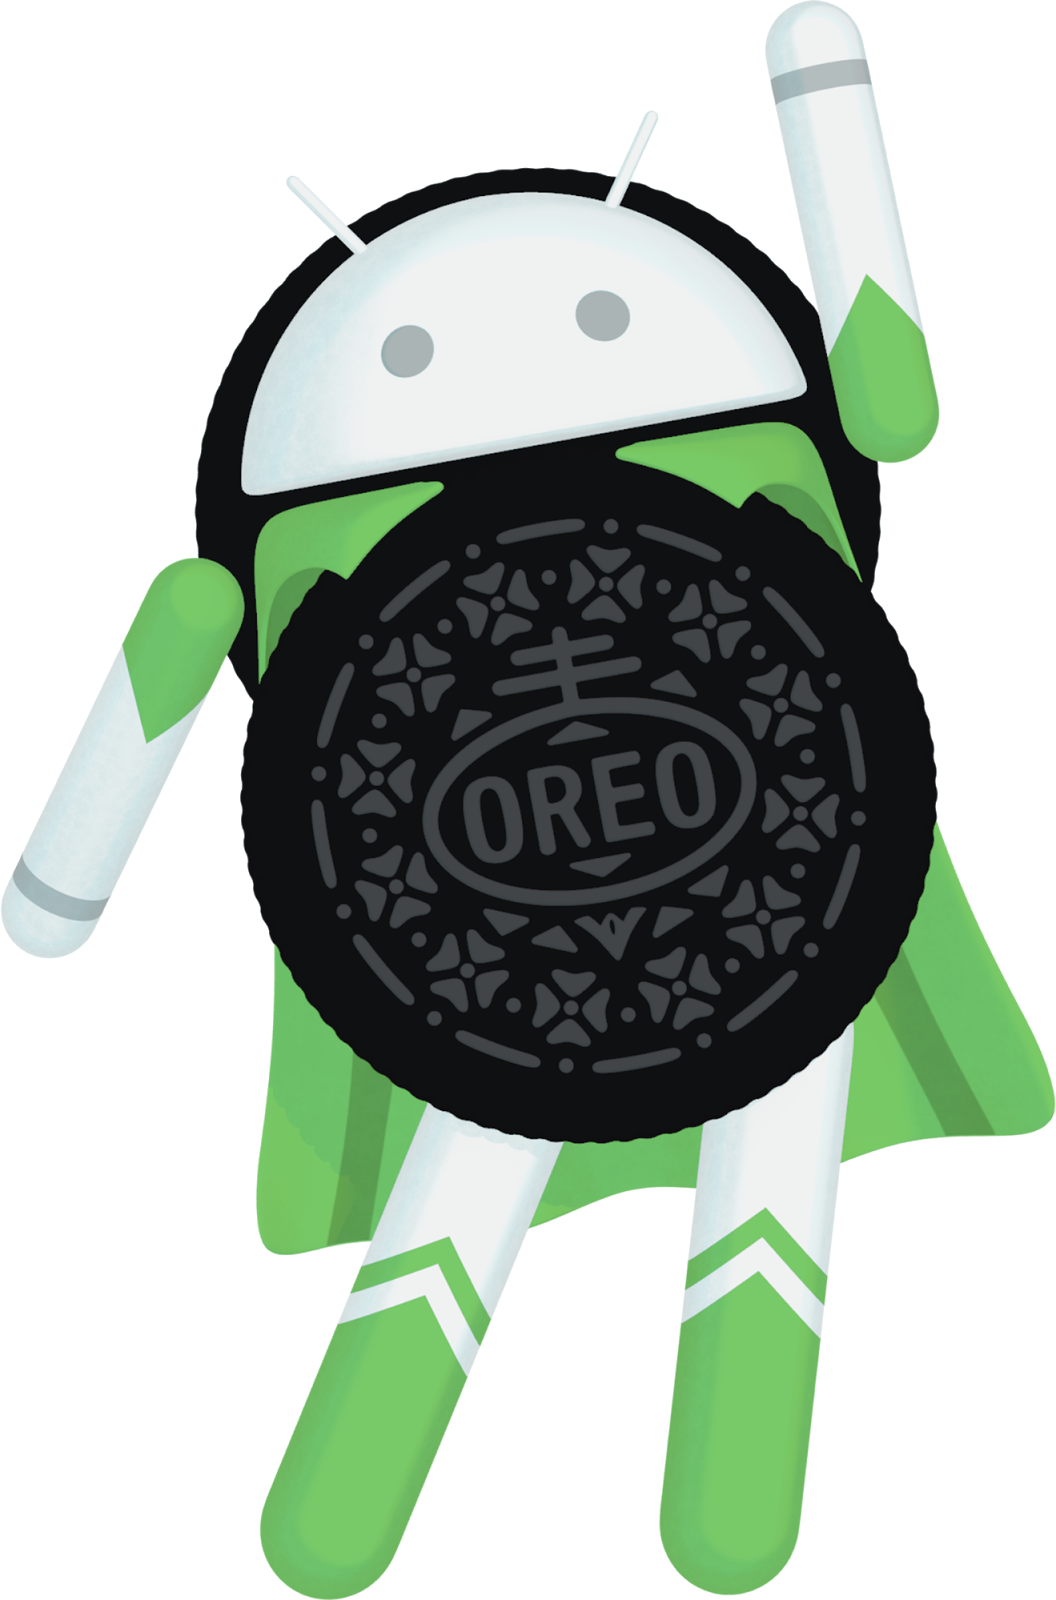 Gambar Oreo Android - KibrisPDR